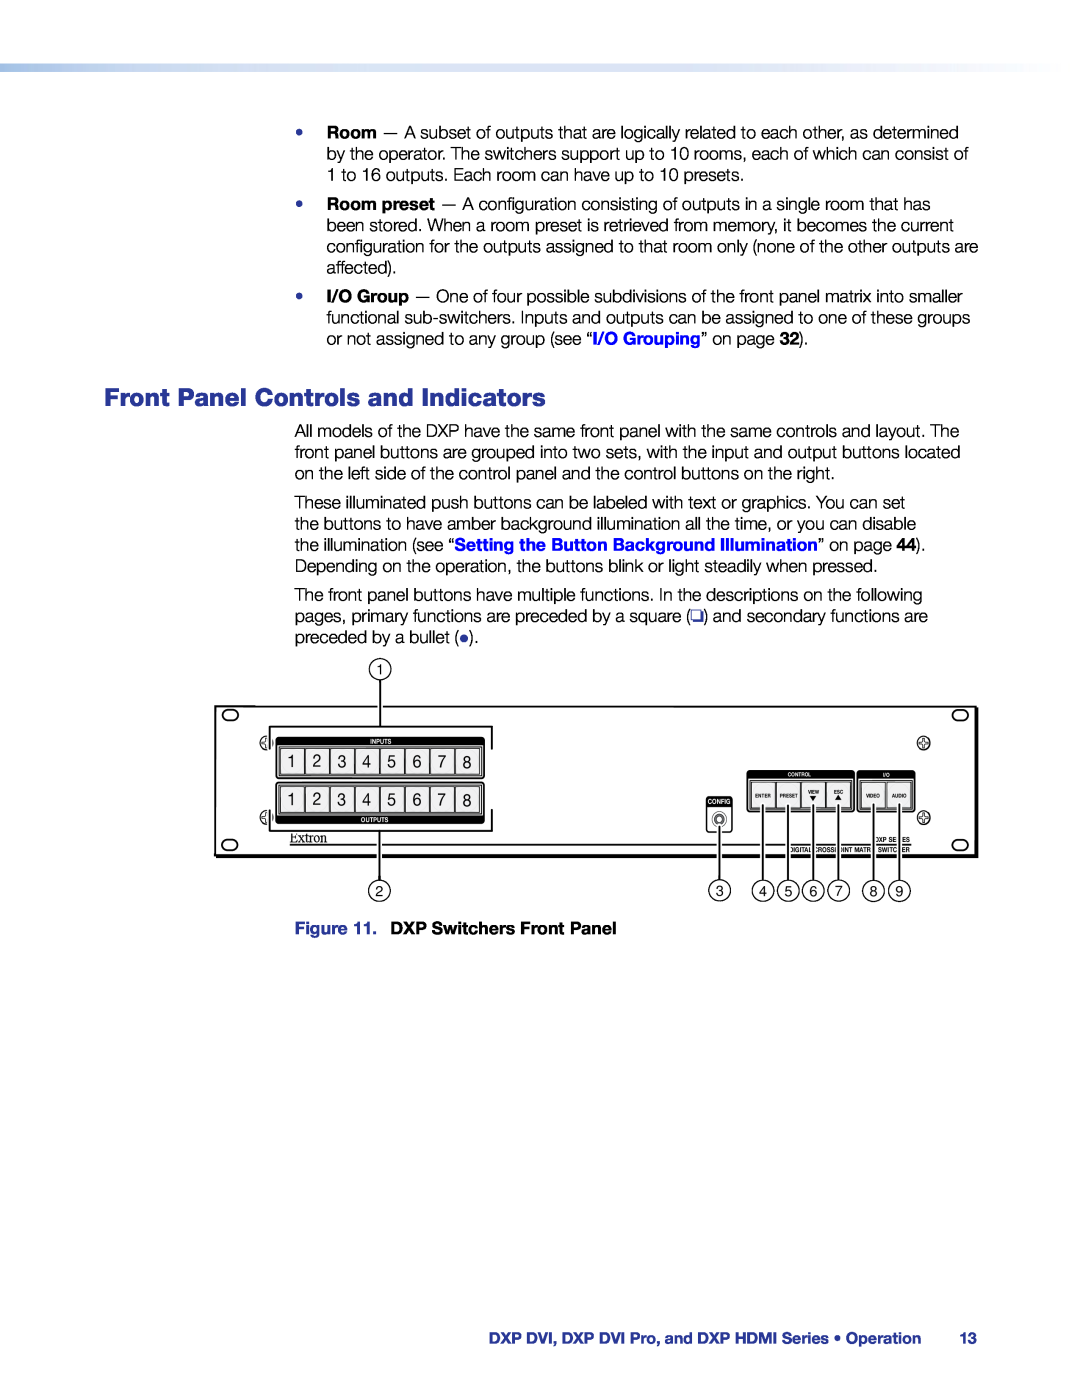 Extron electronic DXP DVI PRO manual Front Panel Controls and Indicators, DXP Switchers Front Panel 